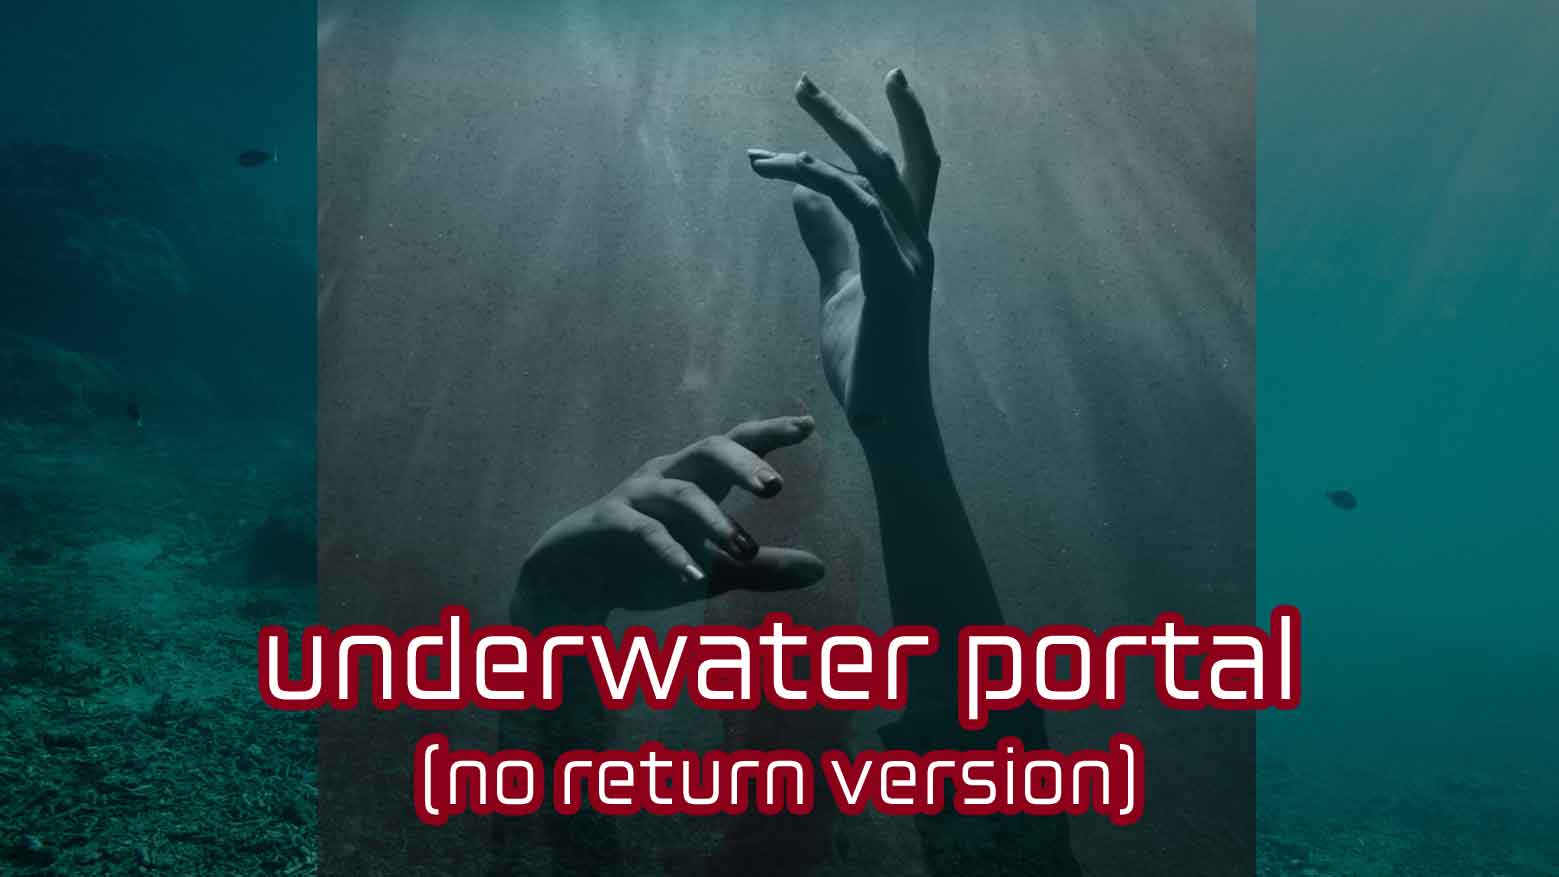 Permalink to: underwater portal (no return version)